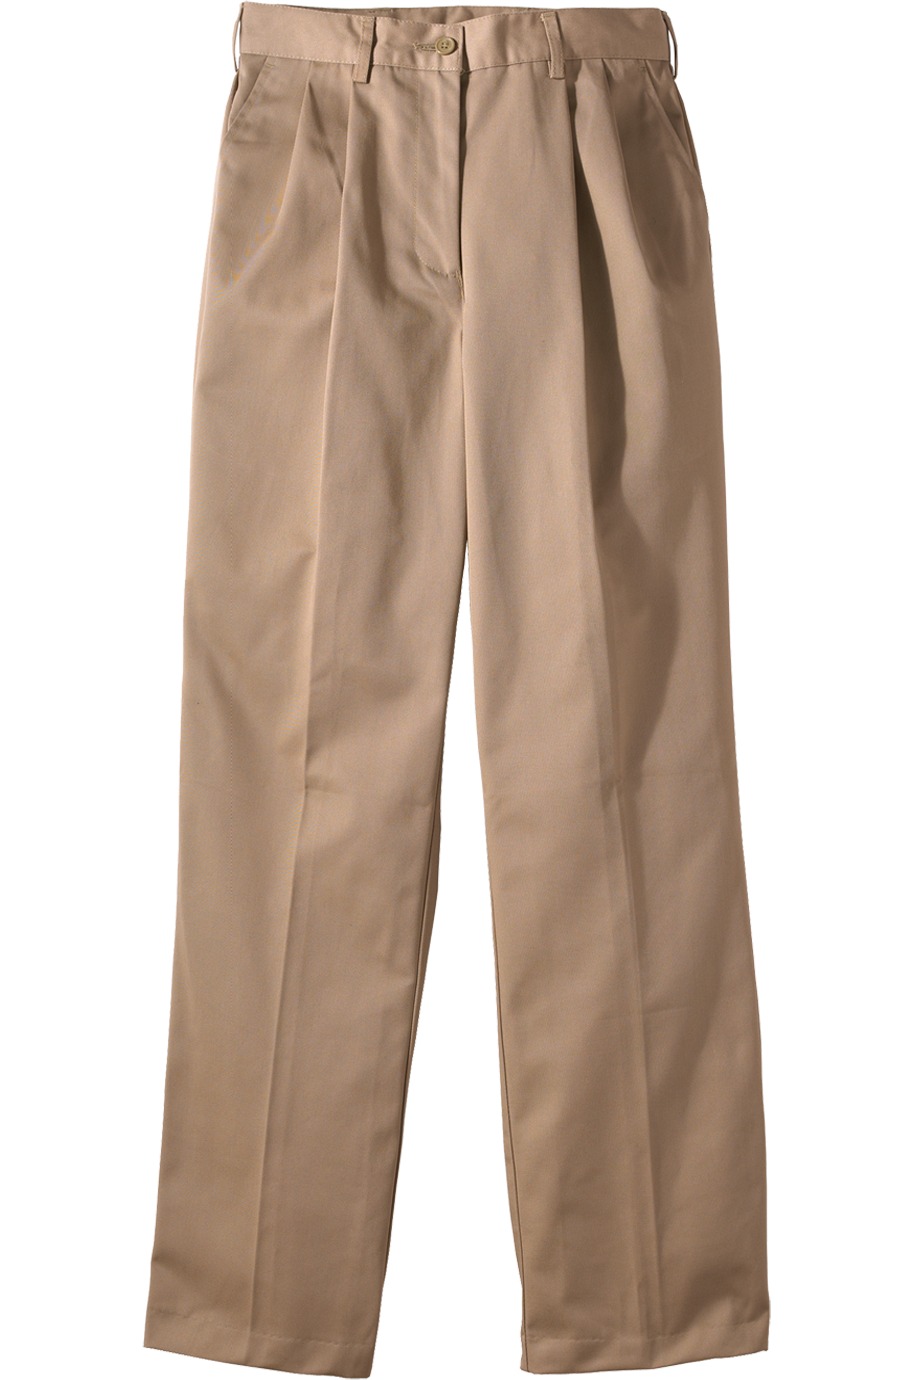 Edwards Garment 8667 - Women's Utility Pleated Pant